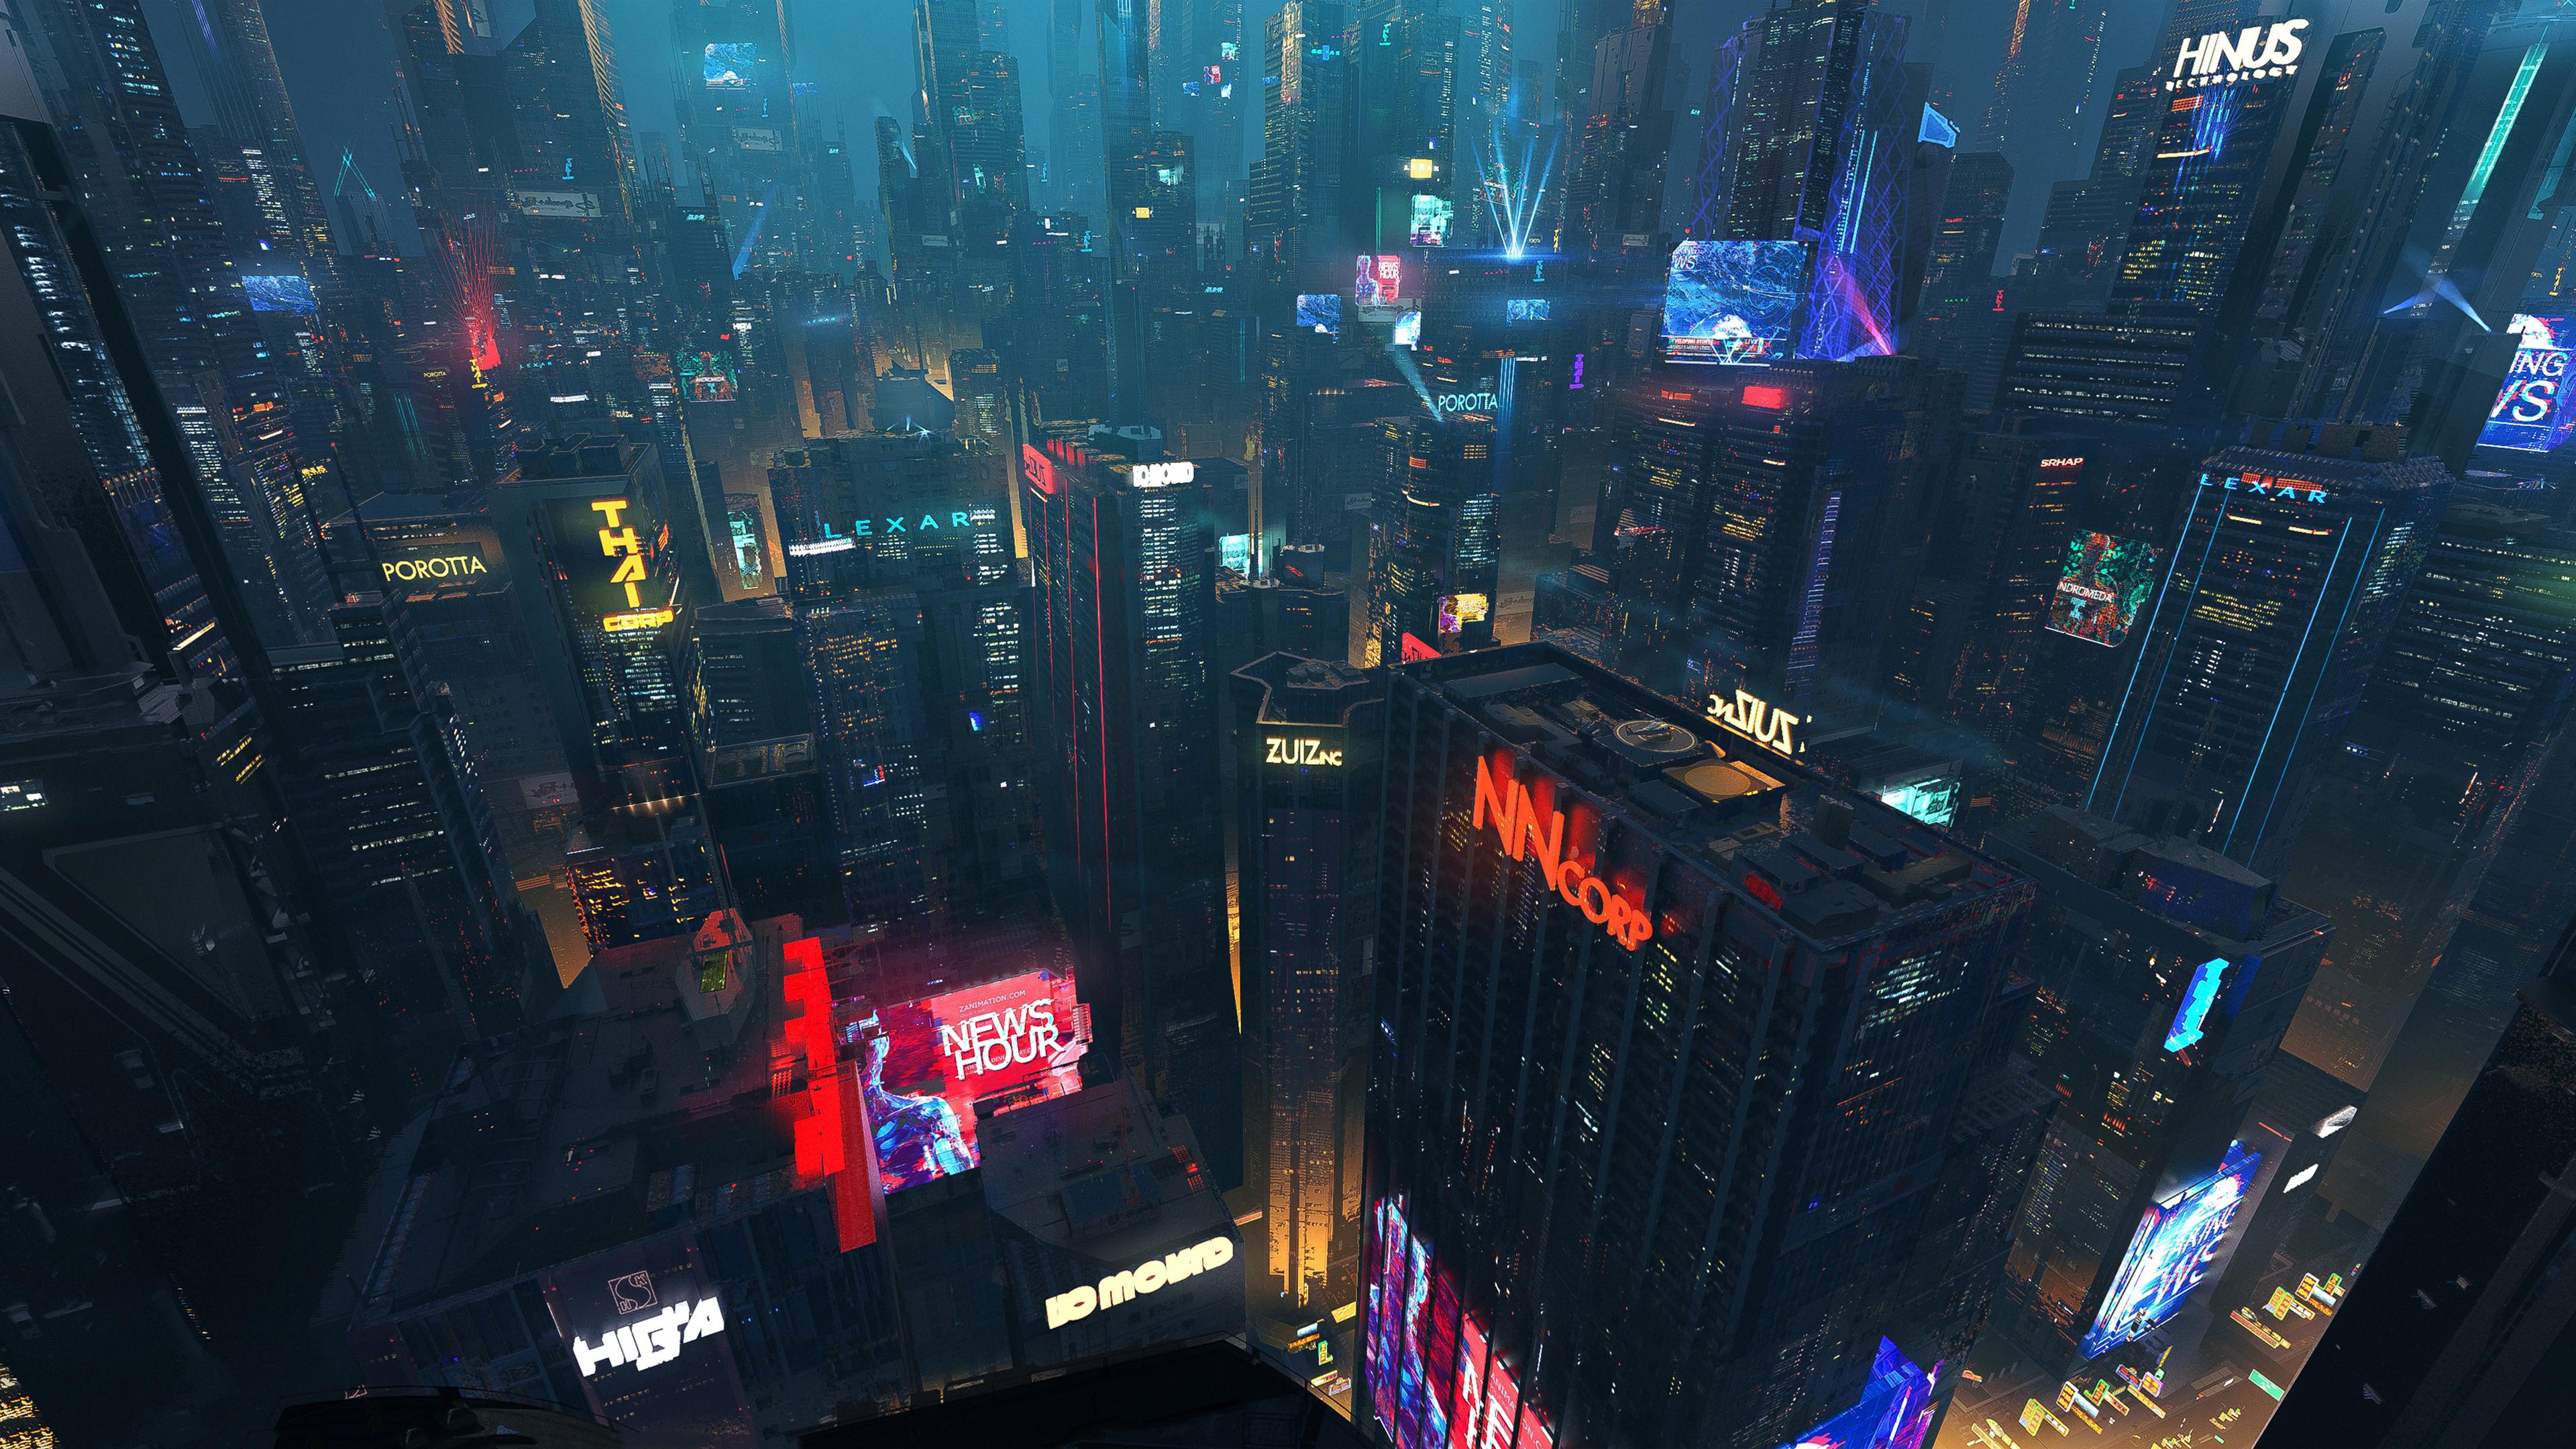 Asus ROG Republic of Gamers  Cyber City 4K wallpaper download